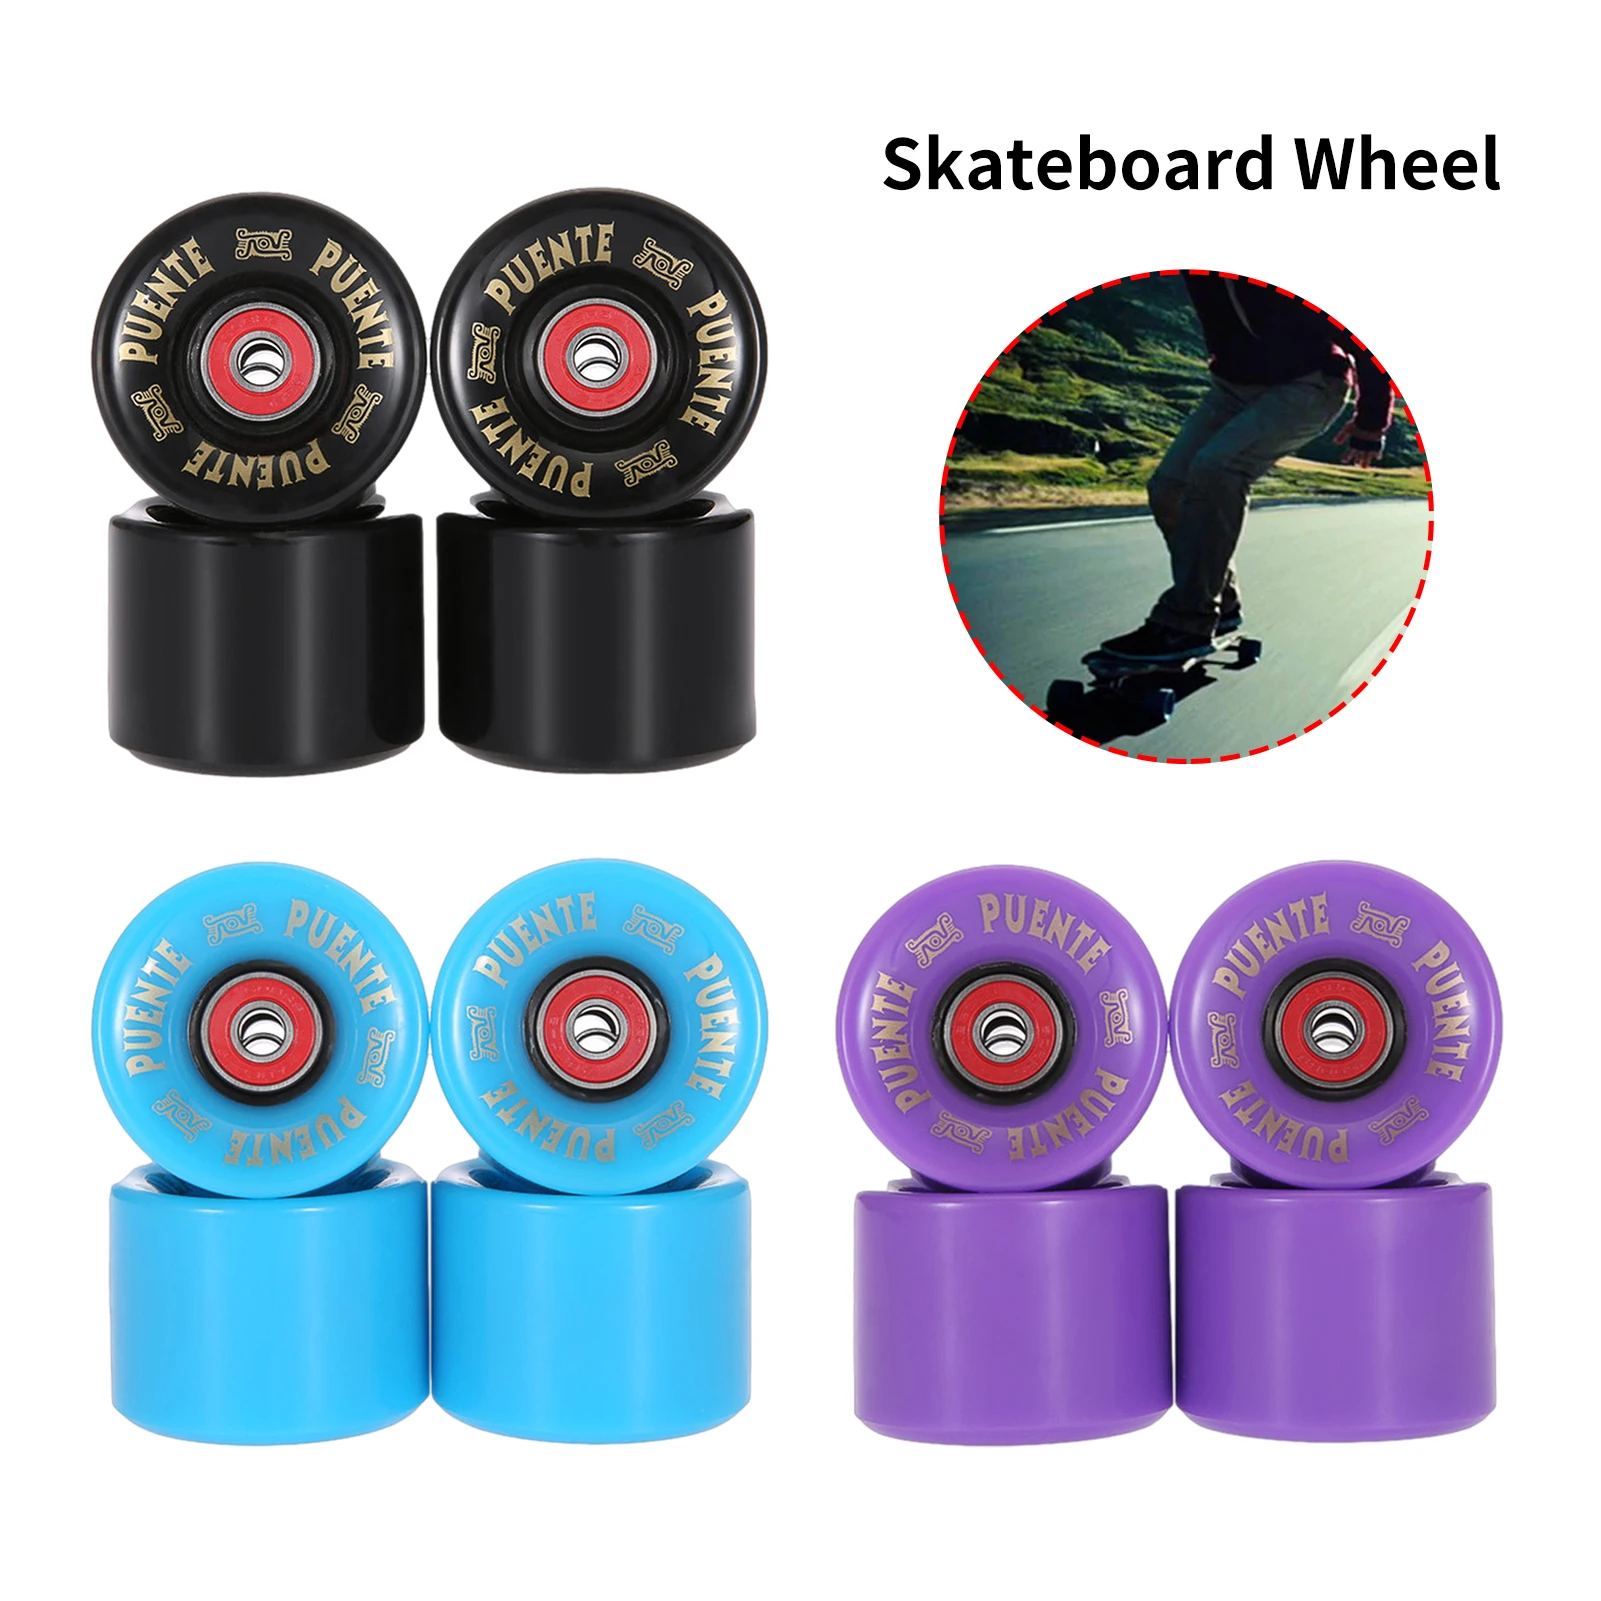 

4 Pcs/set Skateboard Wheels 82A PU roller skates Wheel Skate Longboard Tires with Bearing Skateboard Replacements Parts